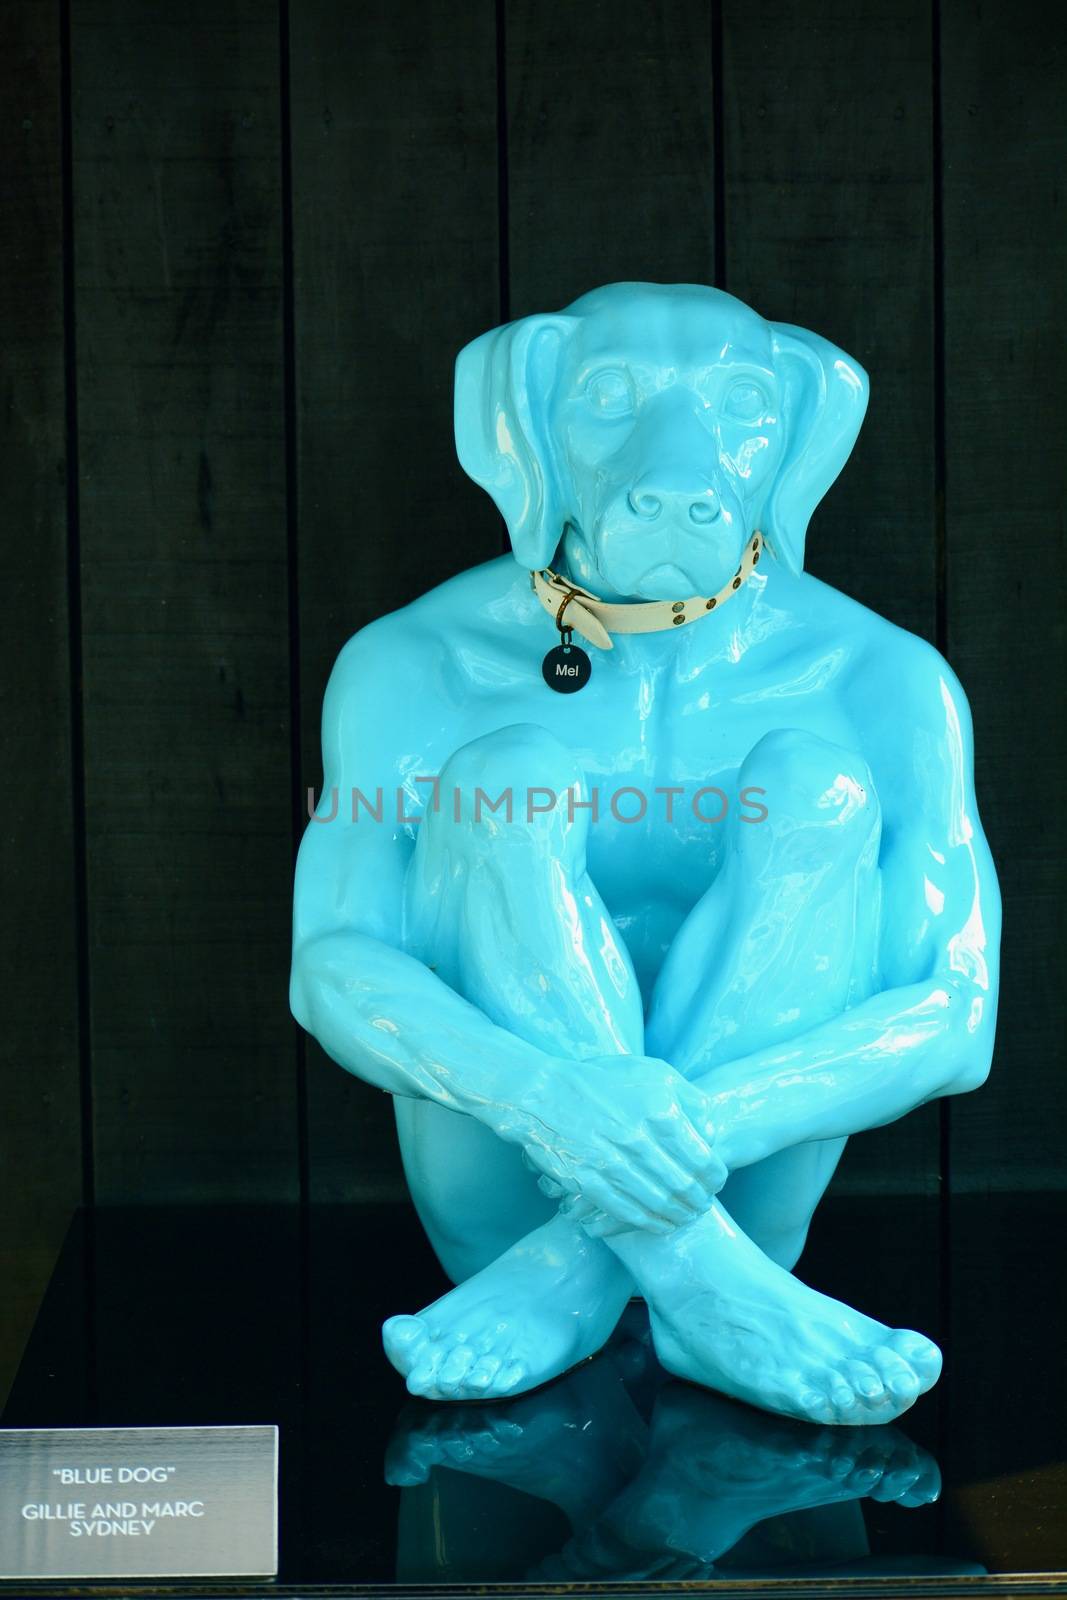 A peculiar modern sculpture representing a blue figure with a human body but a dog’s head.